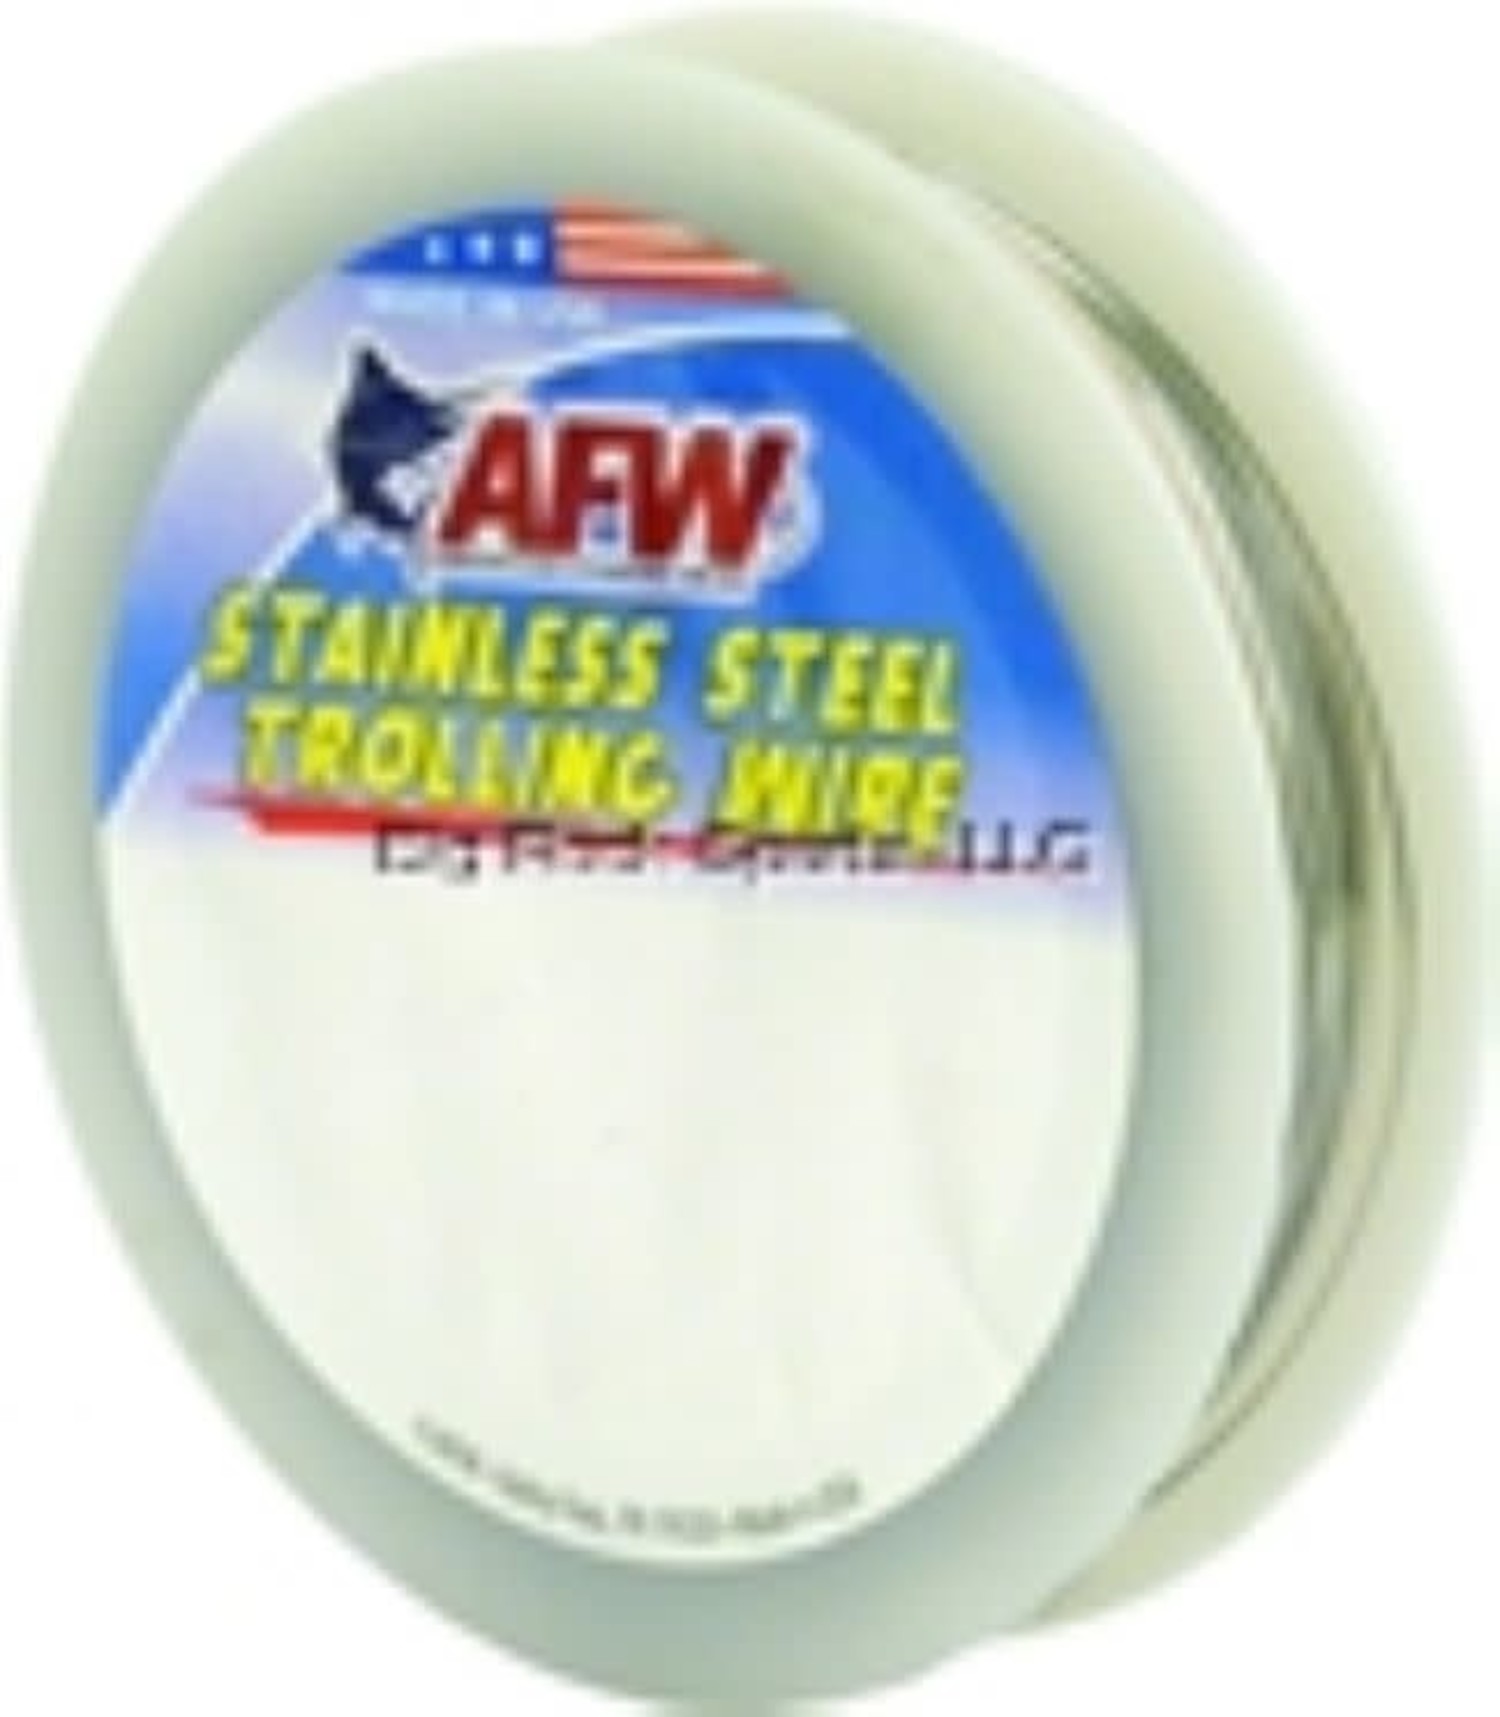 AFW Stainless Steel Trolling Wire 40Lb 300ft Spool - Fin-atics Marine  Supply Ltd. Inc.